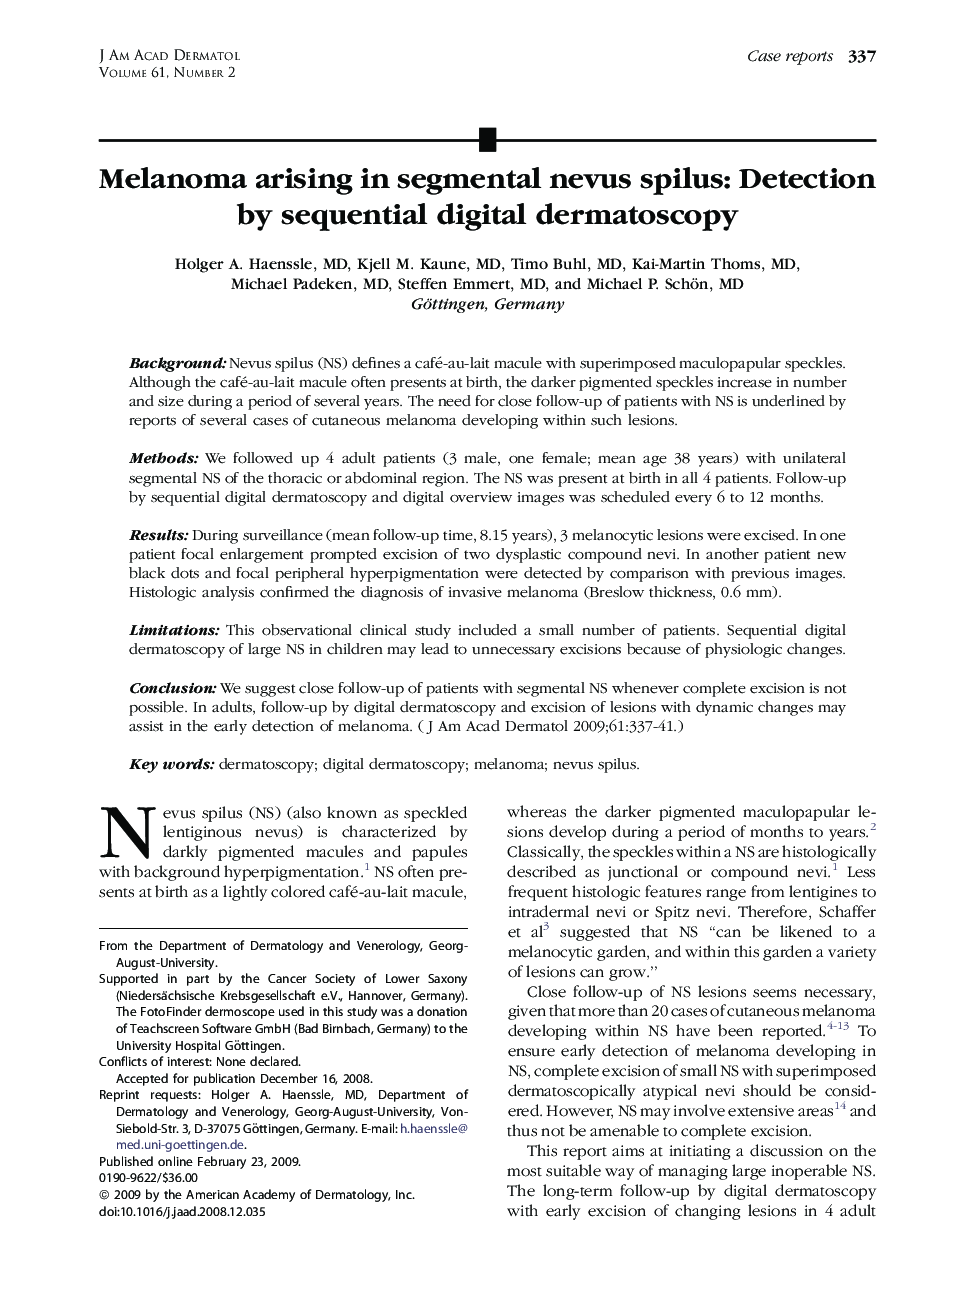 Melanoma arising in segmental nevus spilus: Detection by sequential digital dermatoscopy 